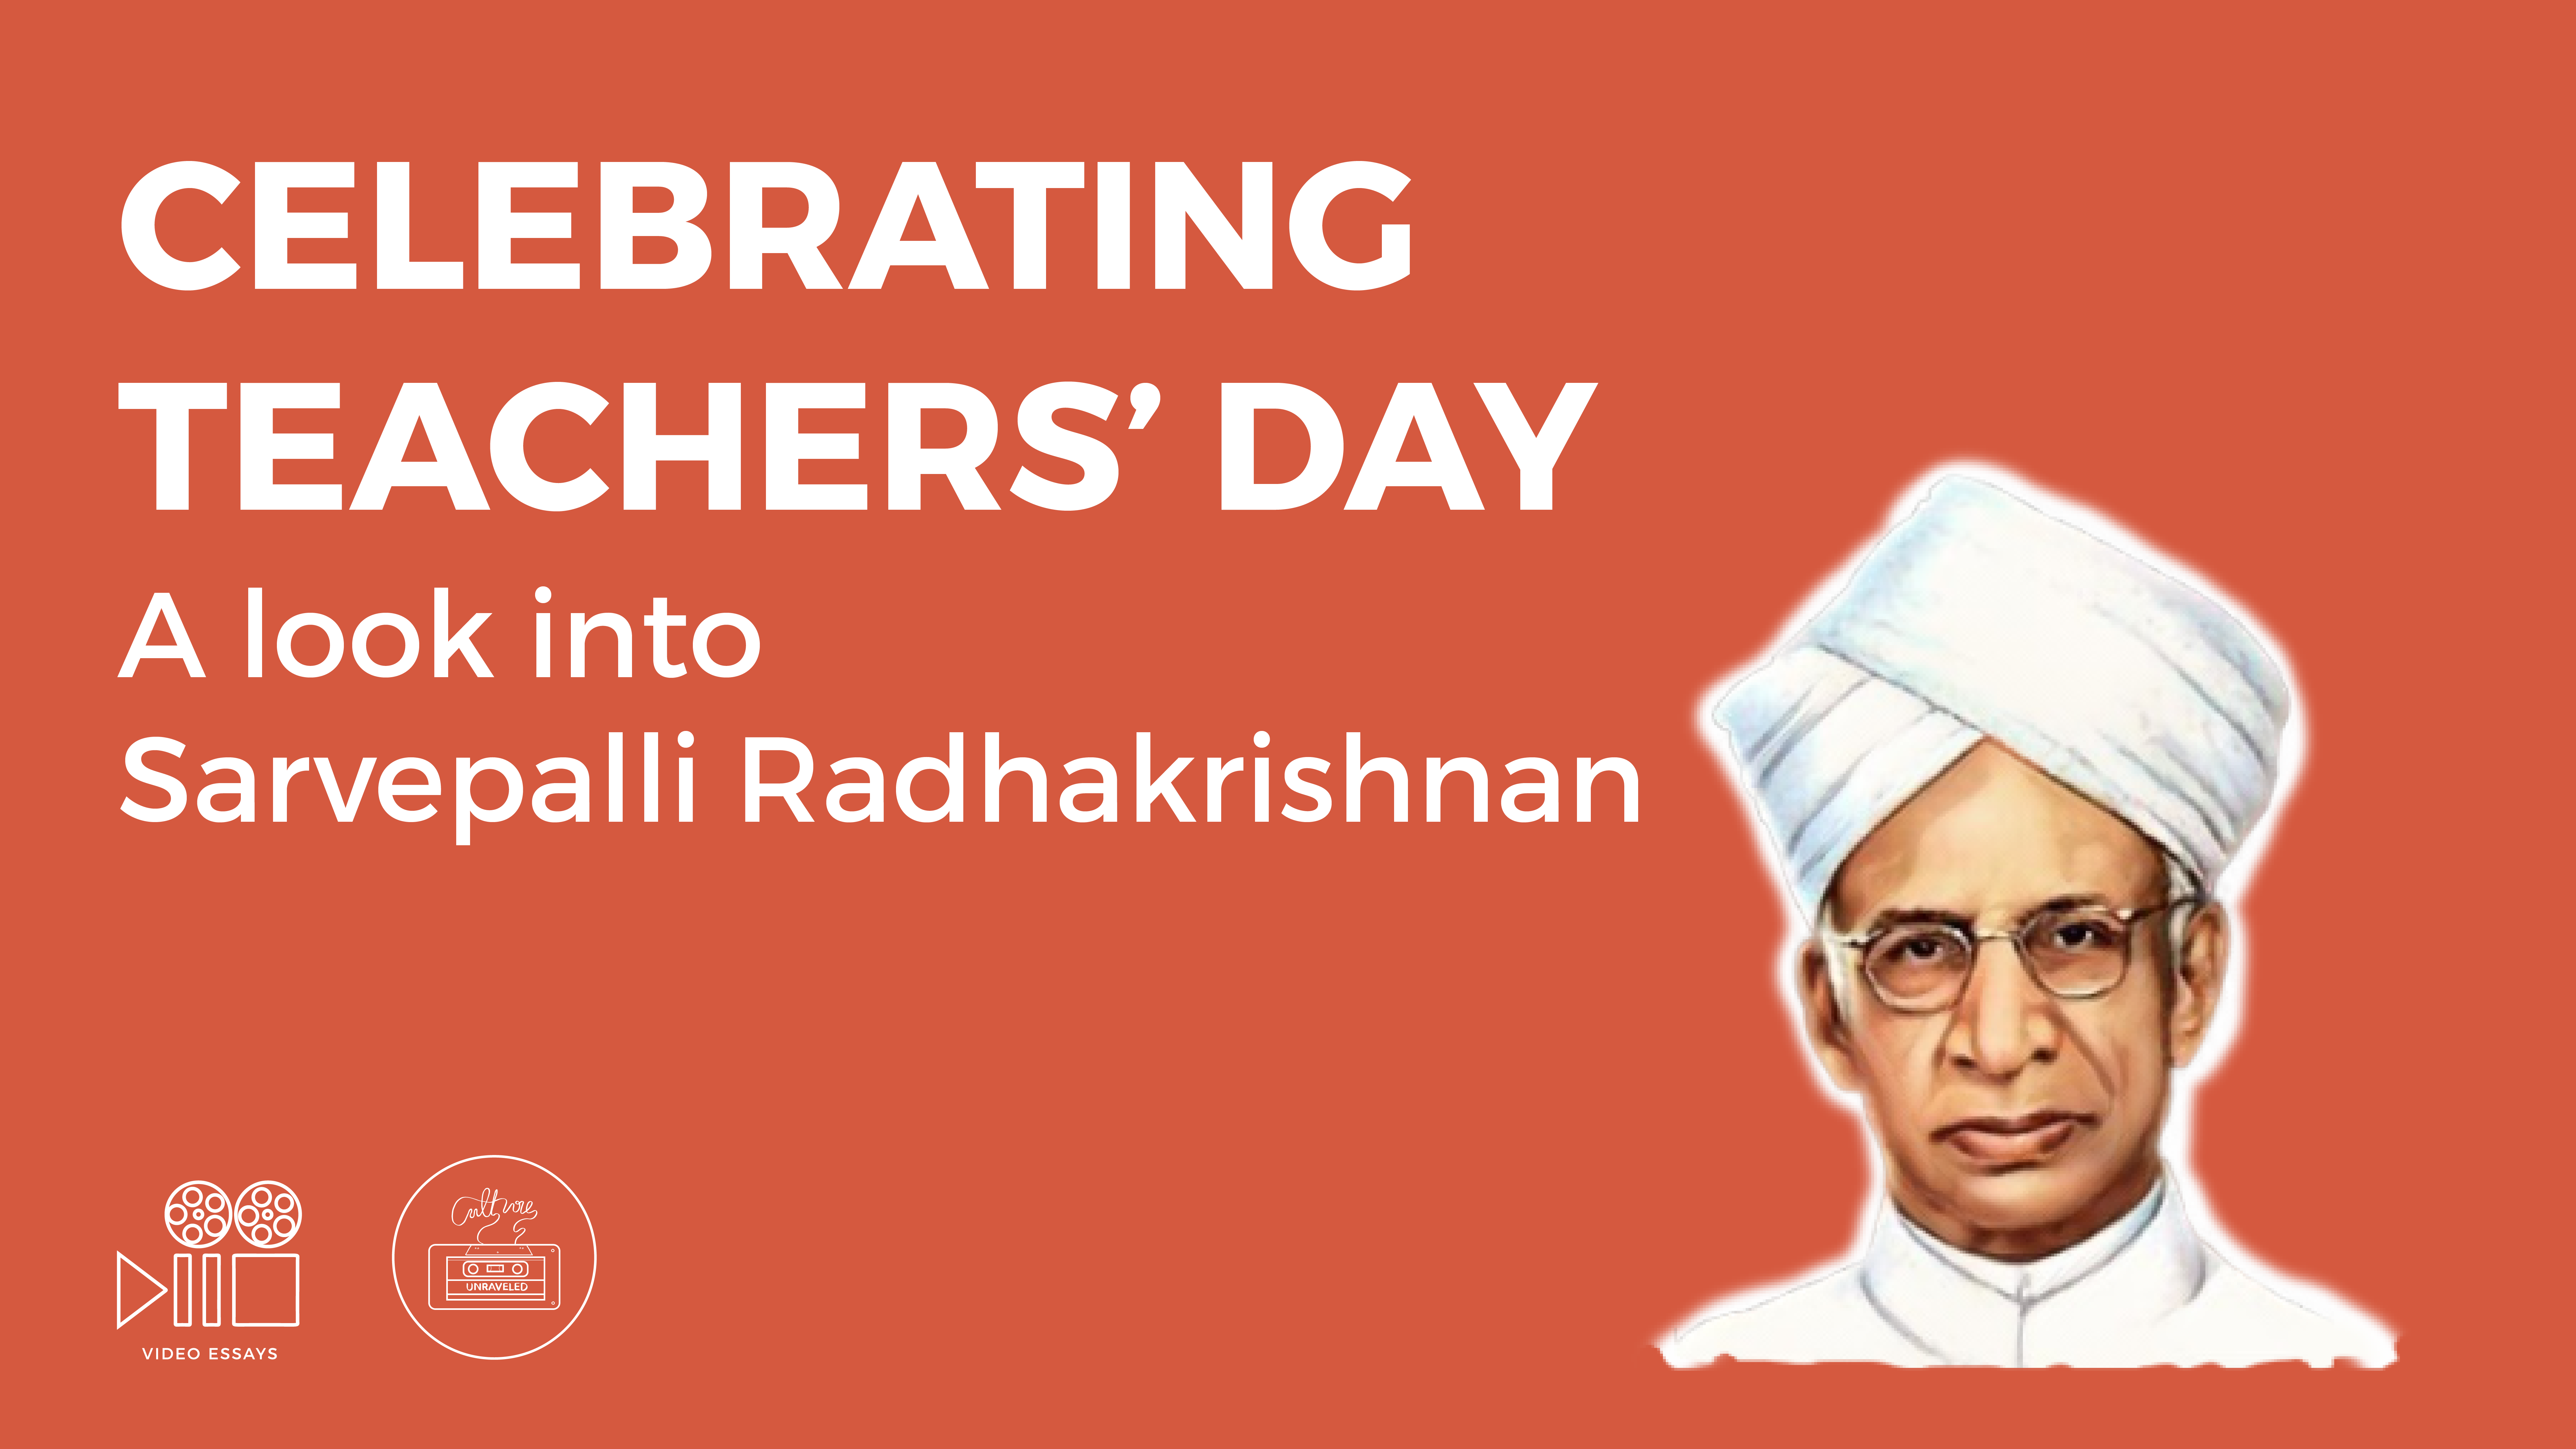 Celebrating Teachers’ Day. A Look into Sarvepalli Radhakrishnan